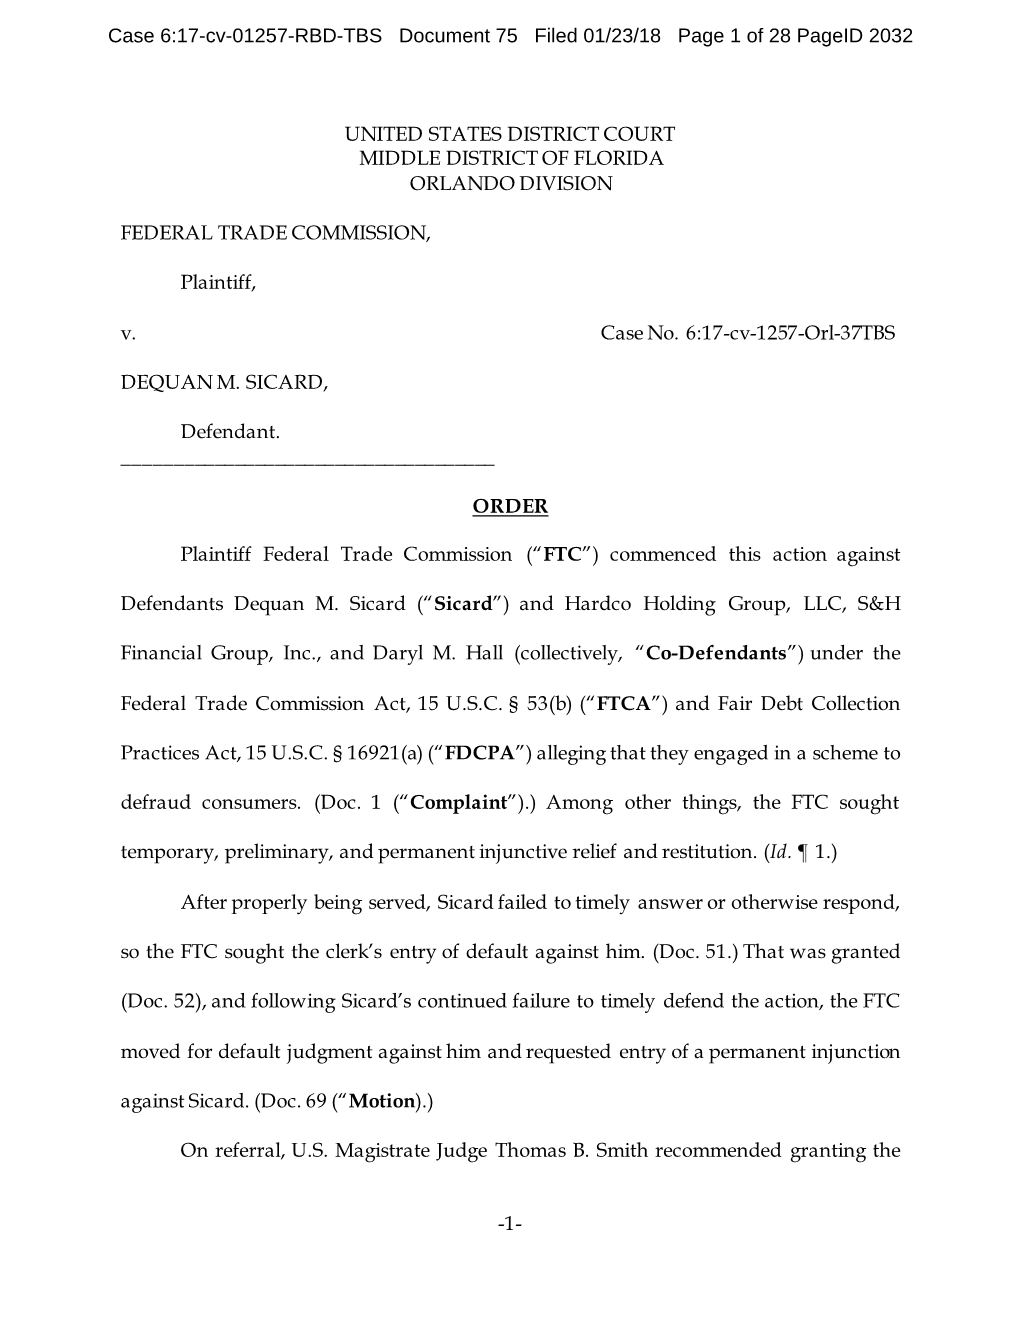 Order Granting FTC's Motion for Default Judgment (Defendant Dequan M. Sicard)